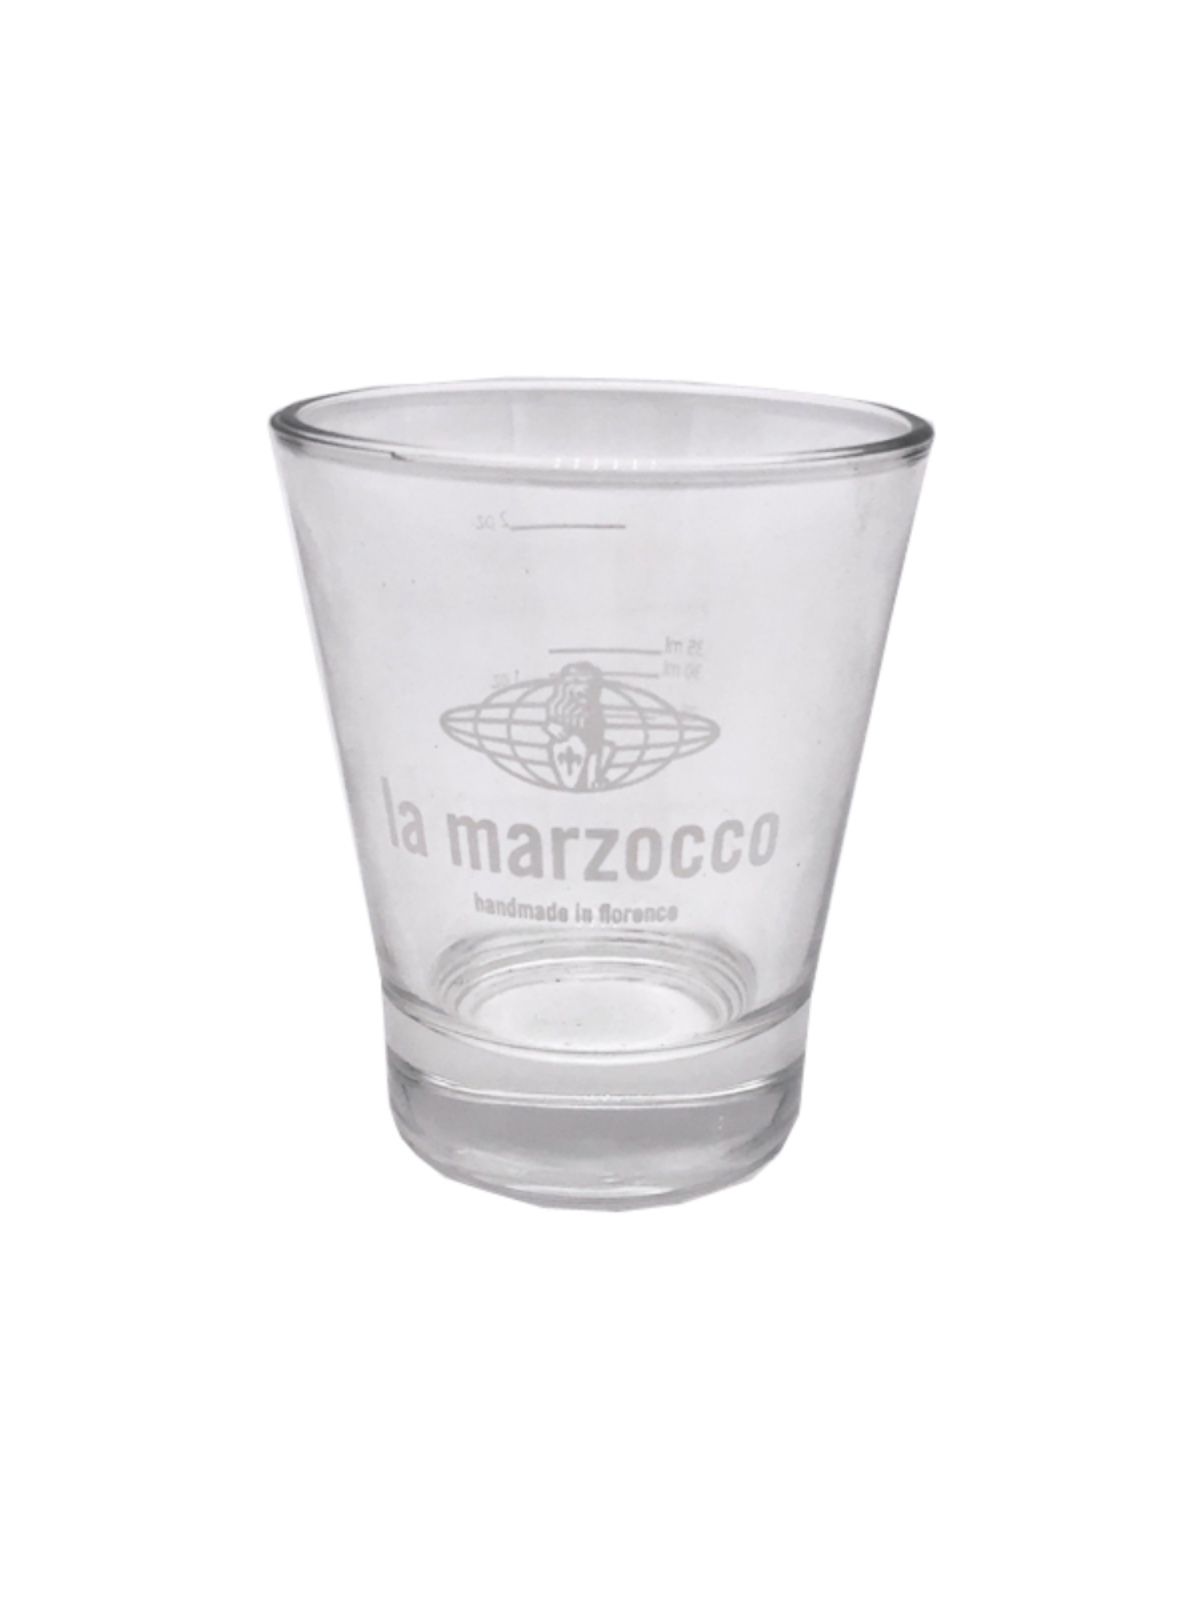 La marzocco 歐式玻璃風格 80ml 濃縮咖啡測量杯 1個 (8.3折)